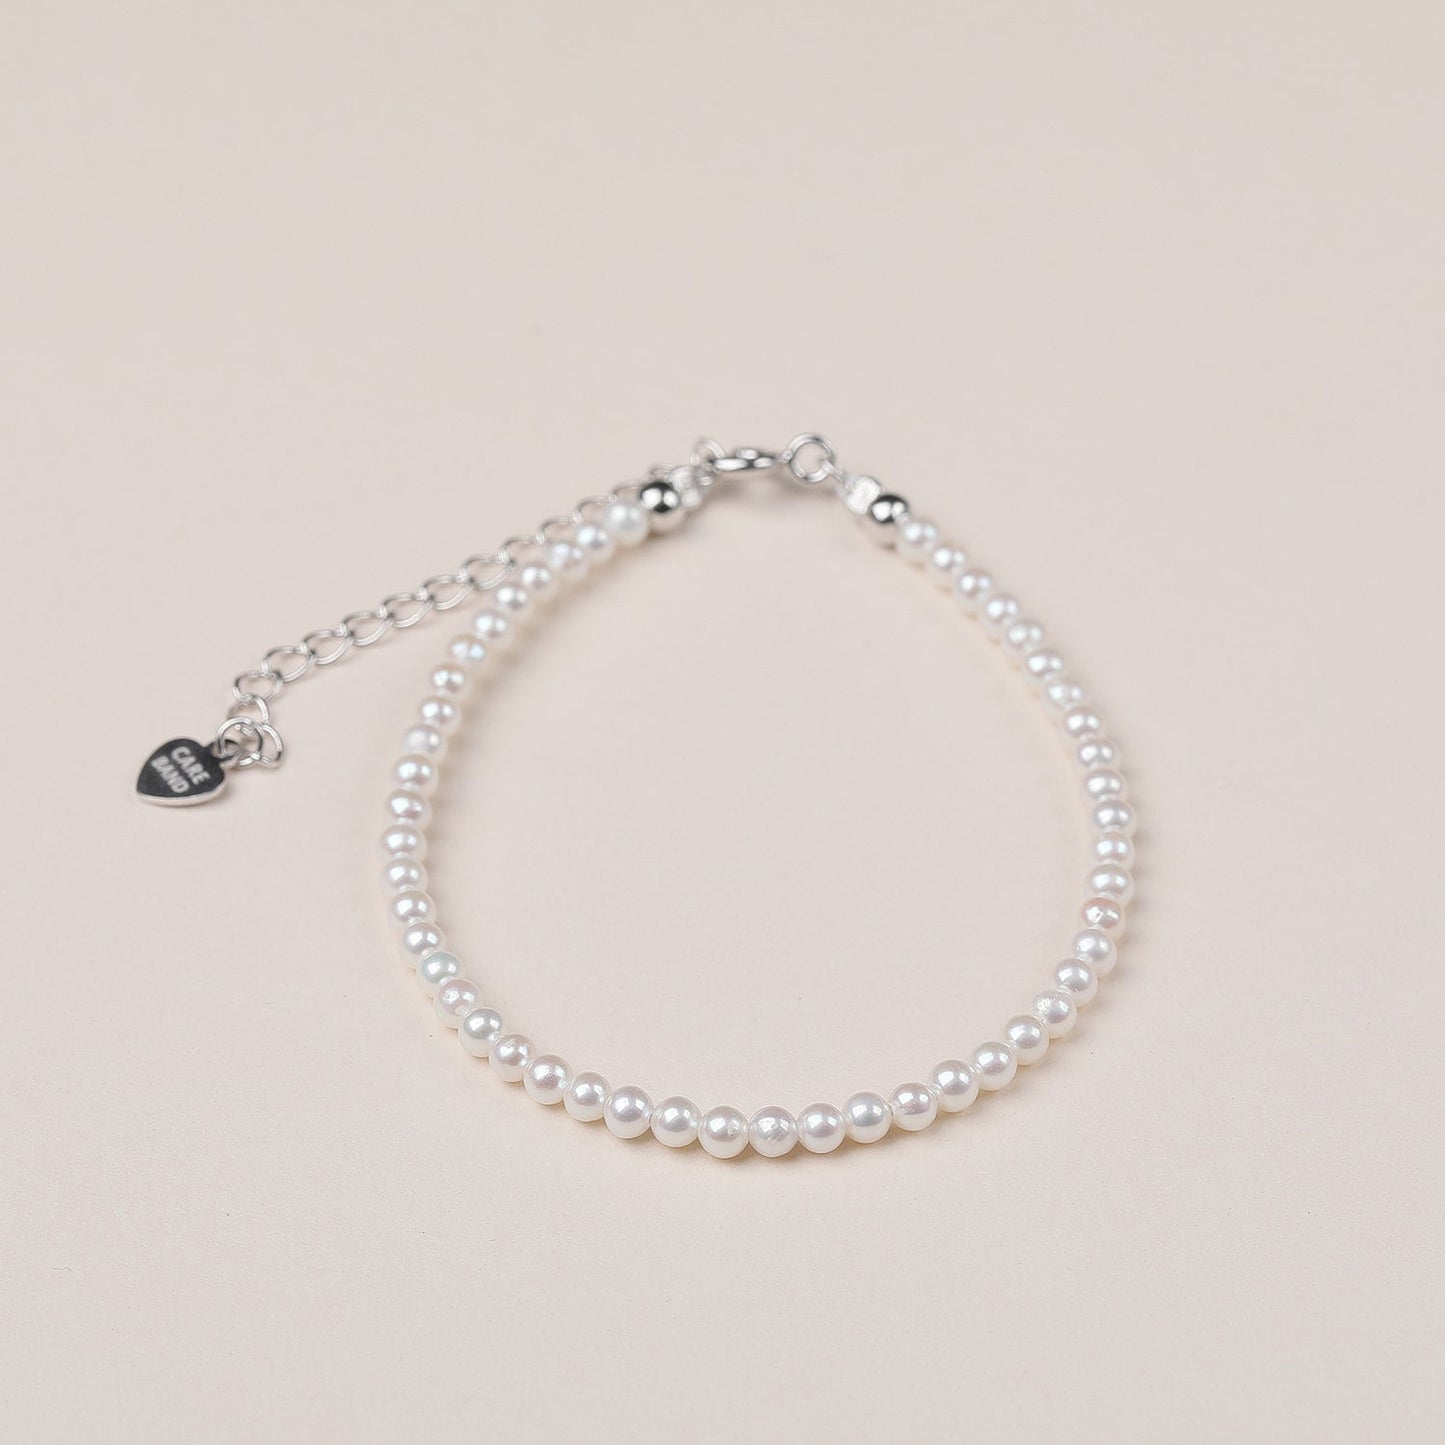 Care Band Freshwater Pearl Bracelet